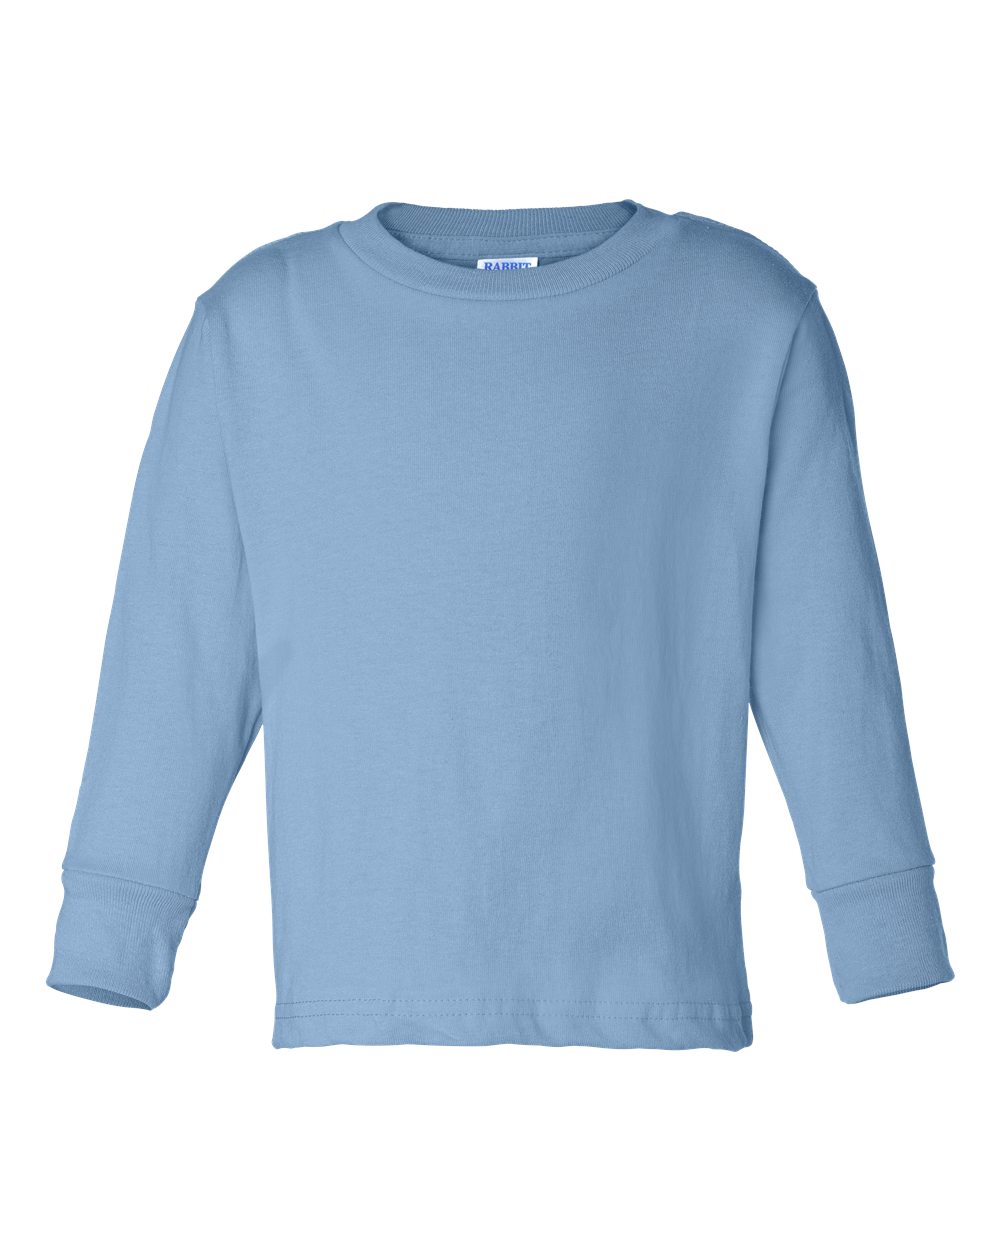 Rabbit Skins RS3311 Toddler Long-Sleeve T-Shirt $6.10 - T-Shirts